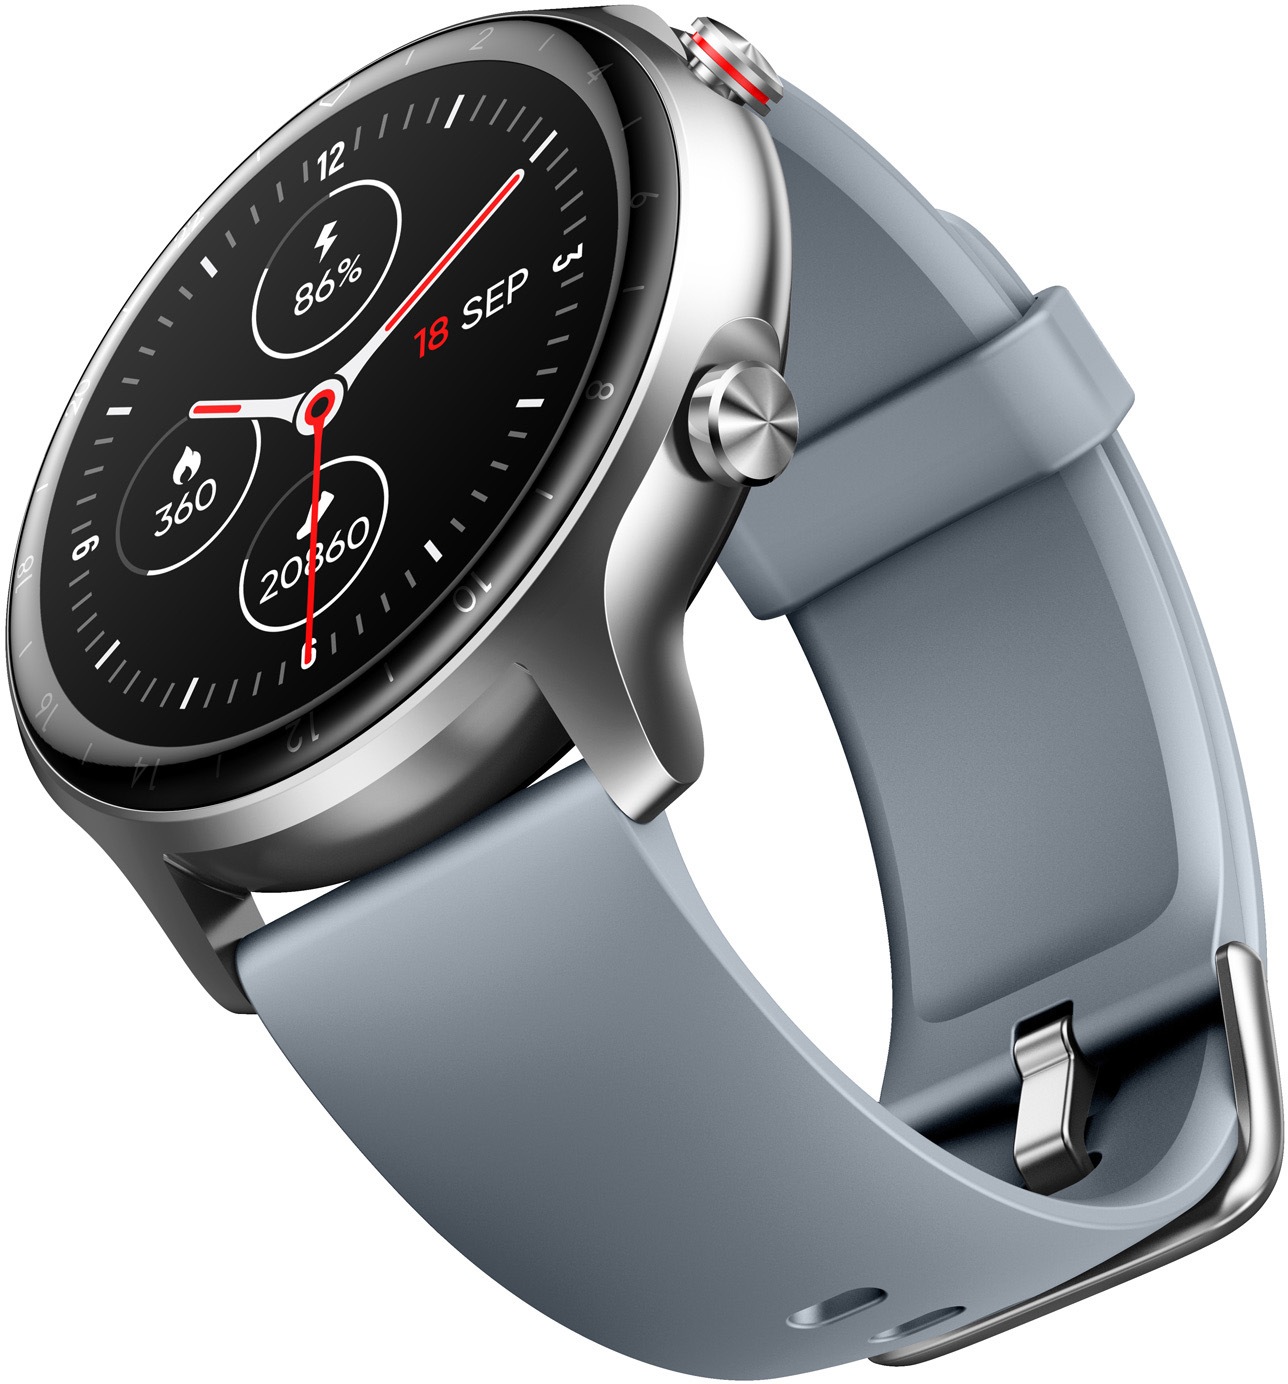 SMARTY 2.0 Smartwatch »SW031E«